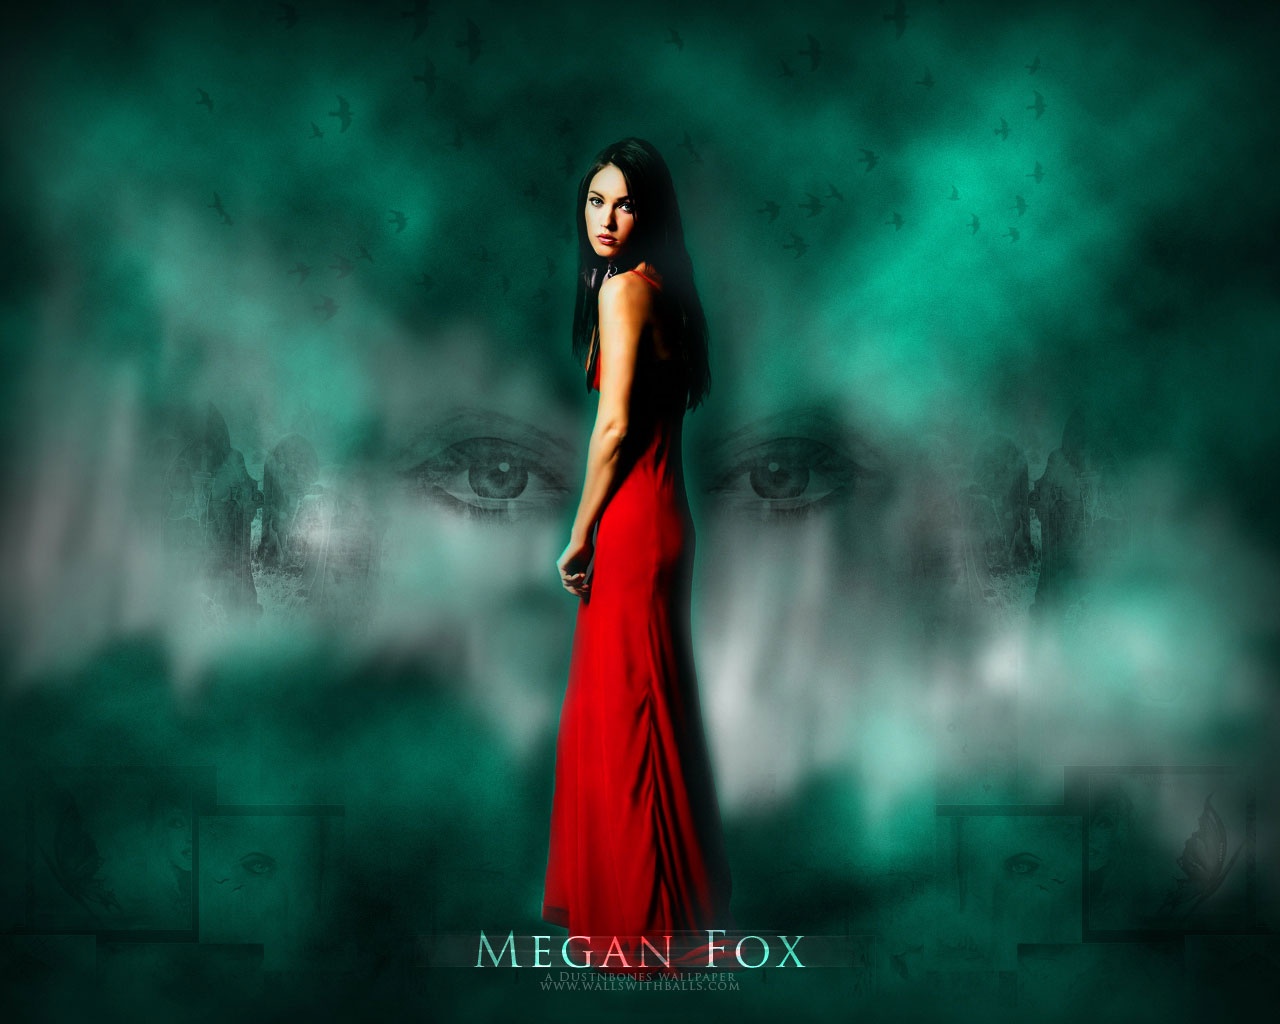 Megan Fox is sexy